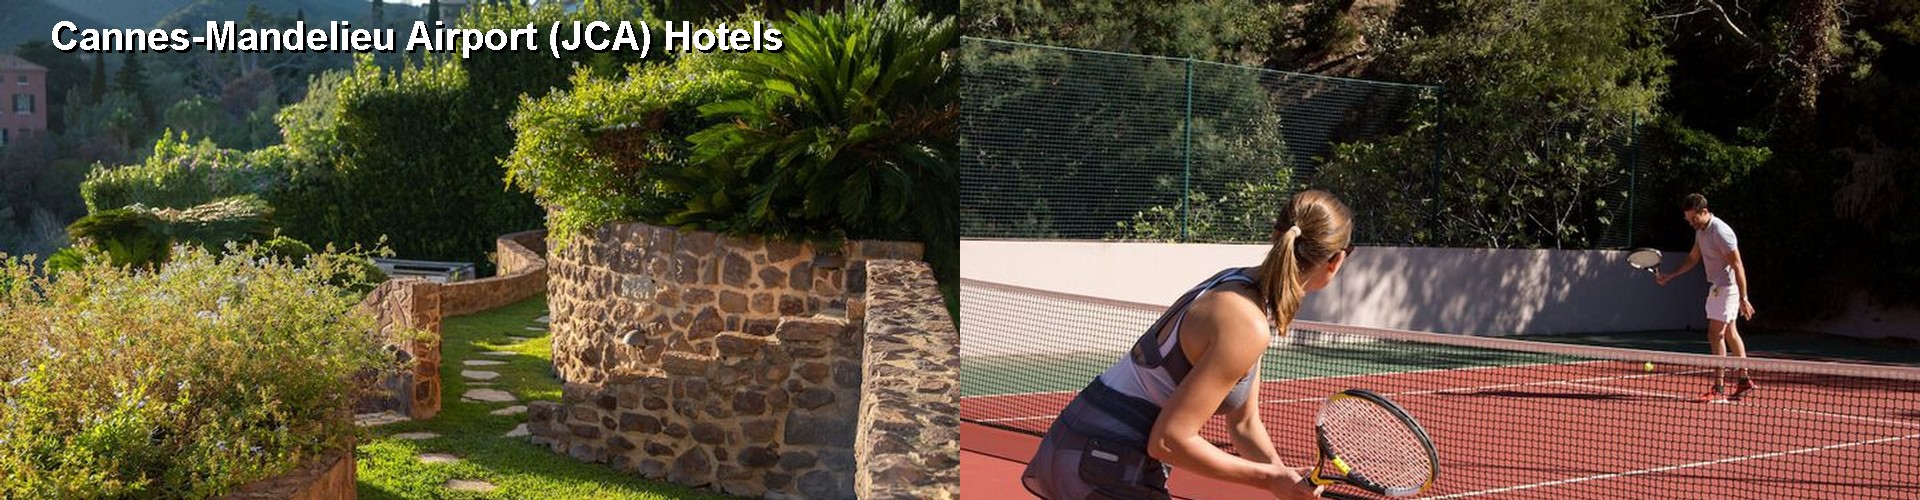 4 Best Hotels near Cannes-Mandelieu Airport (JCA)